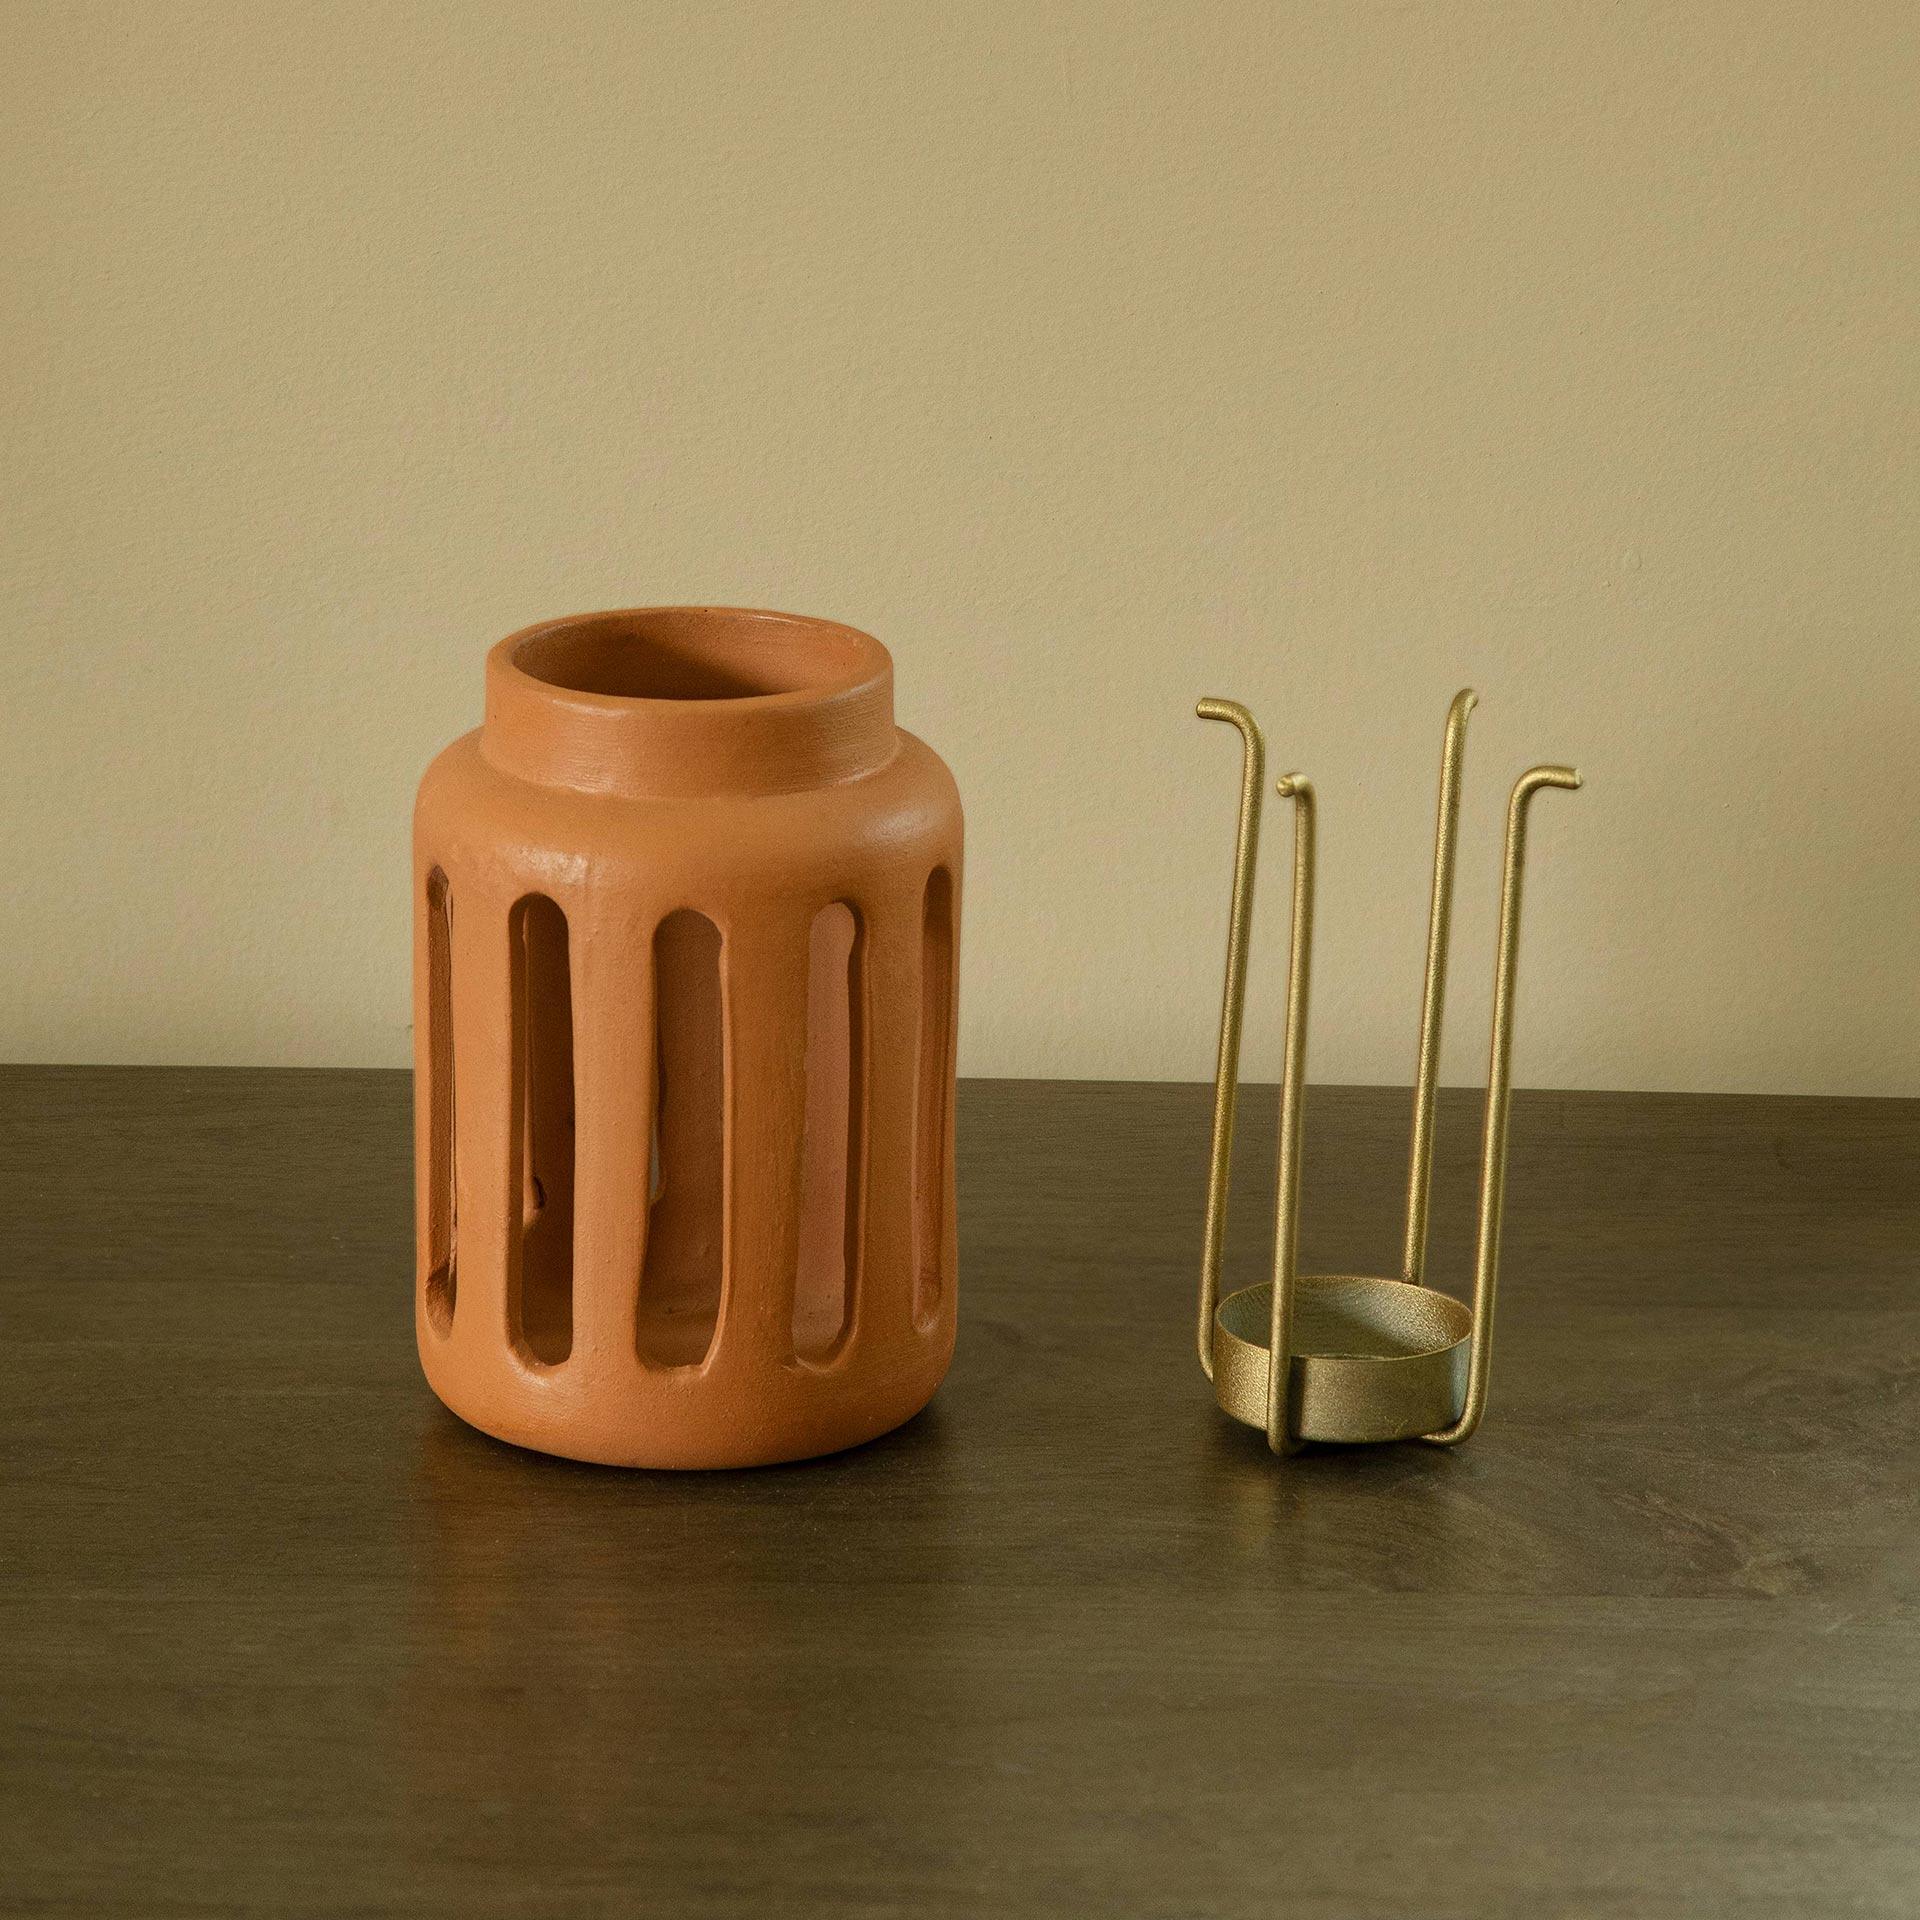 Lupa Terracotta Round Lantern W/Metal Handle - Small